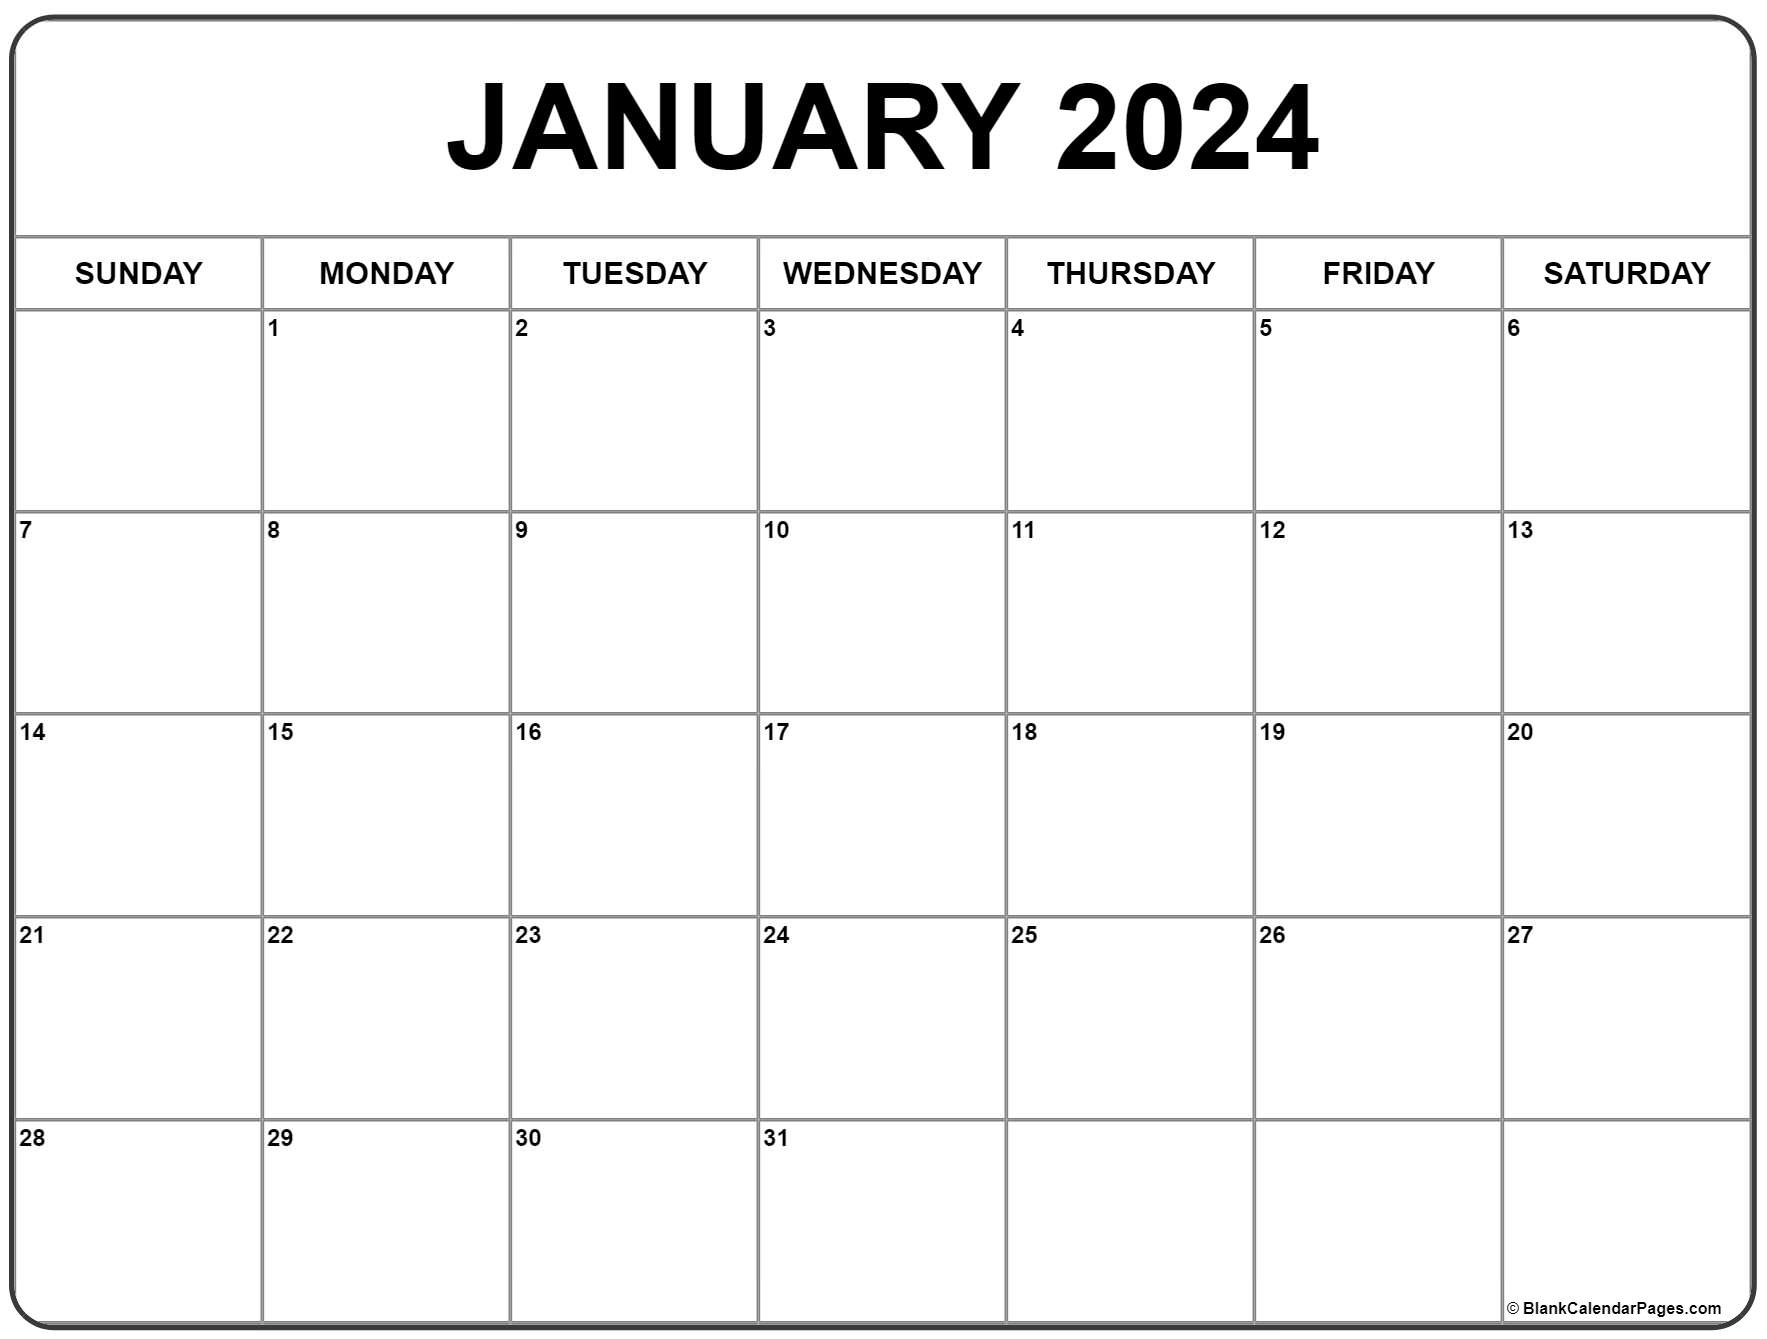 January 2024 Calendar | Free Printable Calendar for Monthly Calendar 2024 Printable